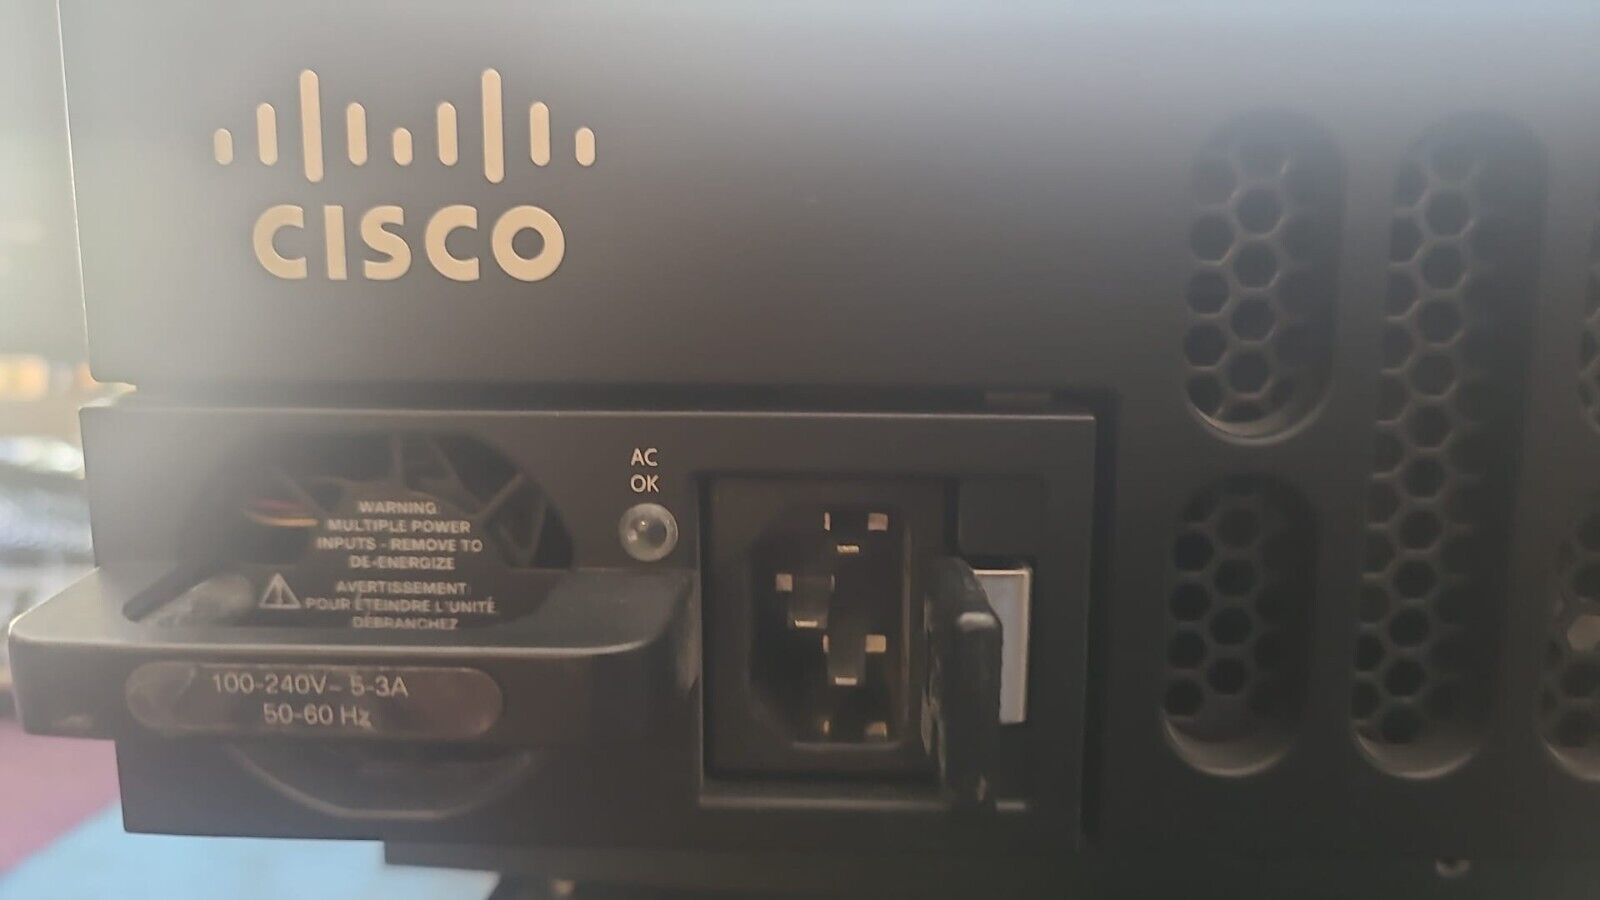 Cisco 4400 Series ISR4451-X/K9 V10 Managed appxk9/Security/UCK9 Lic No CLK issue